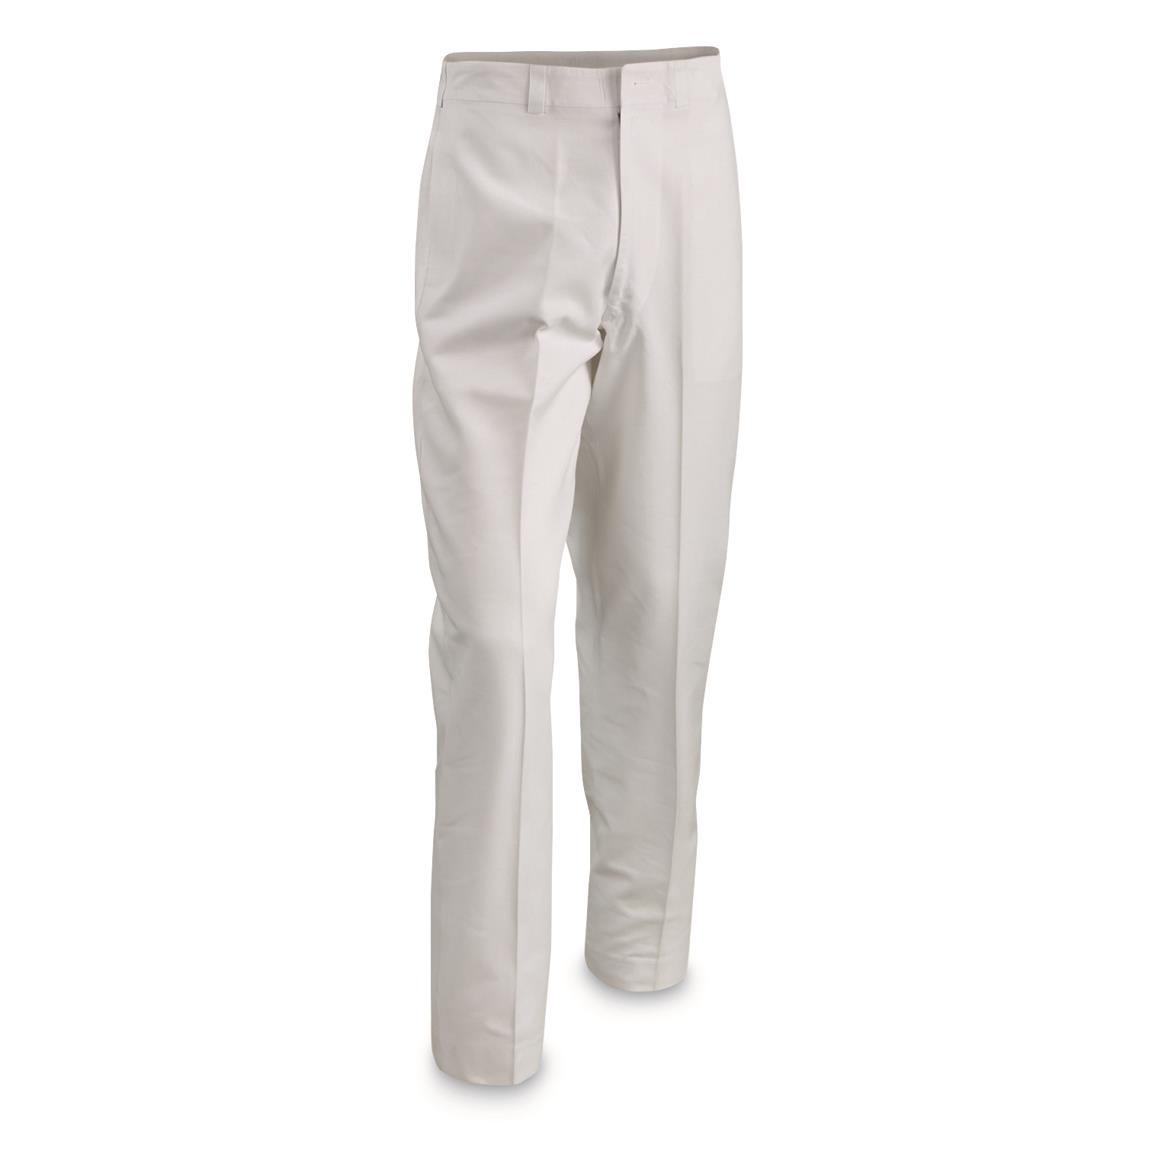 U.S. Military Surplus White Pants, 4 Pack, Like New, White